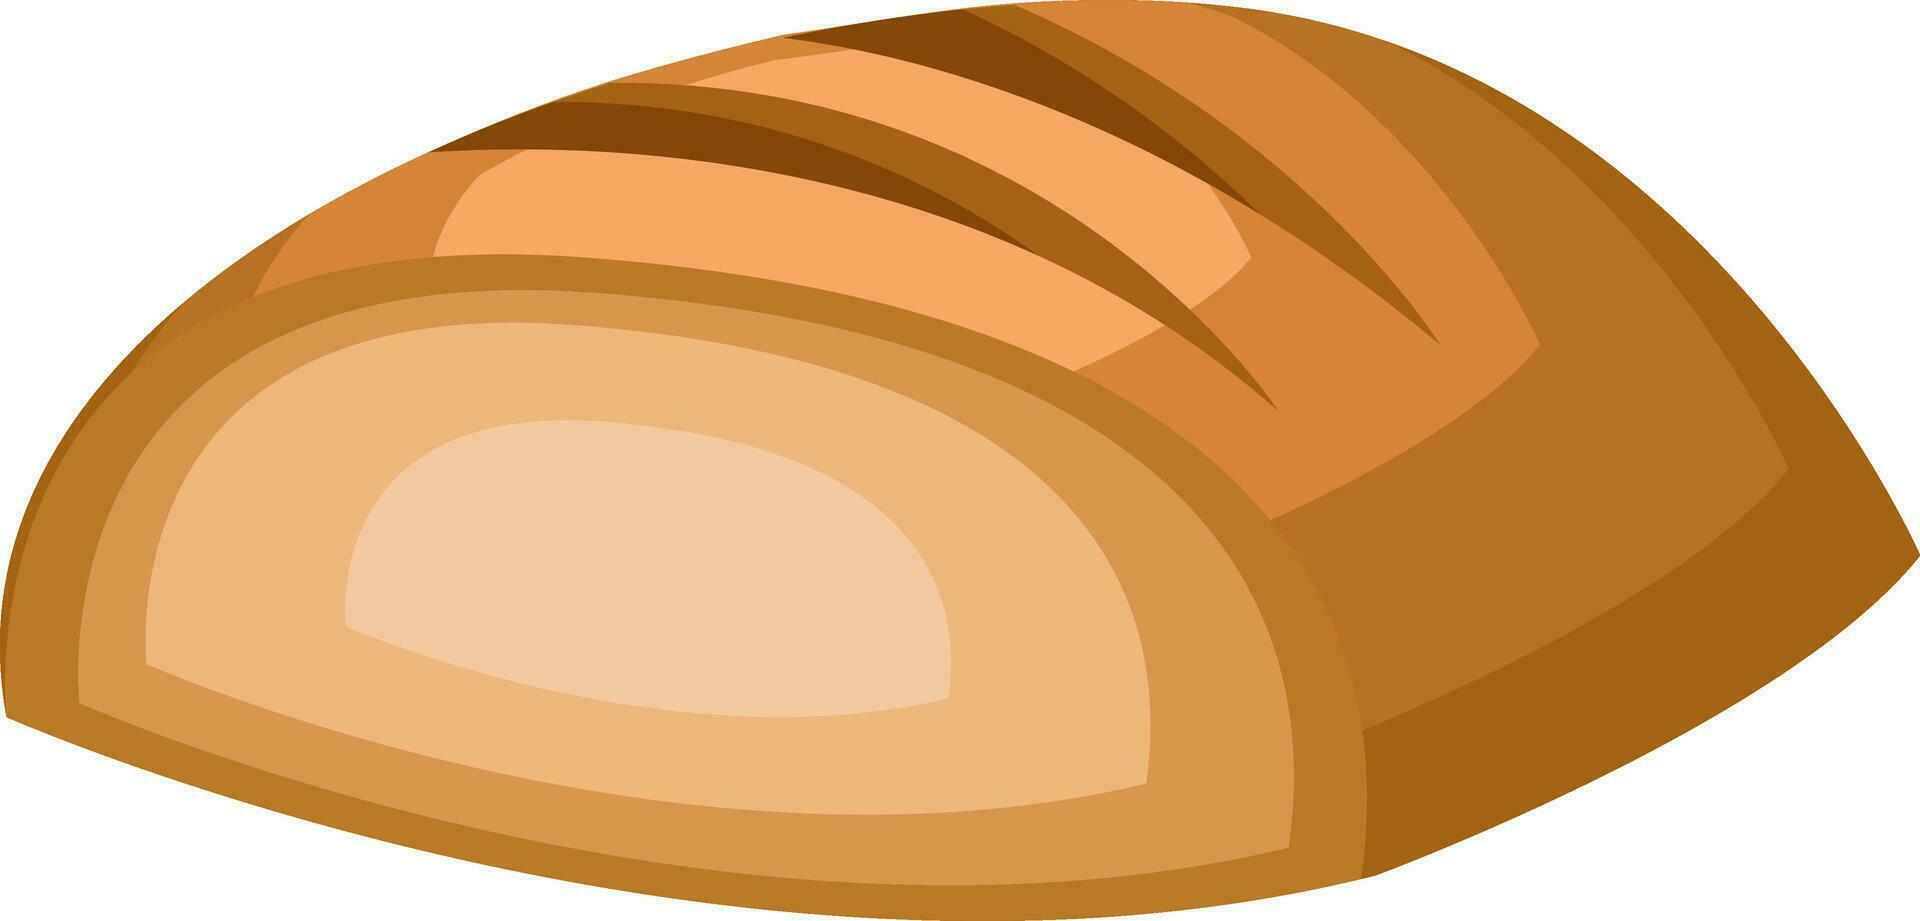 Bread Slice vector color illustration.